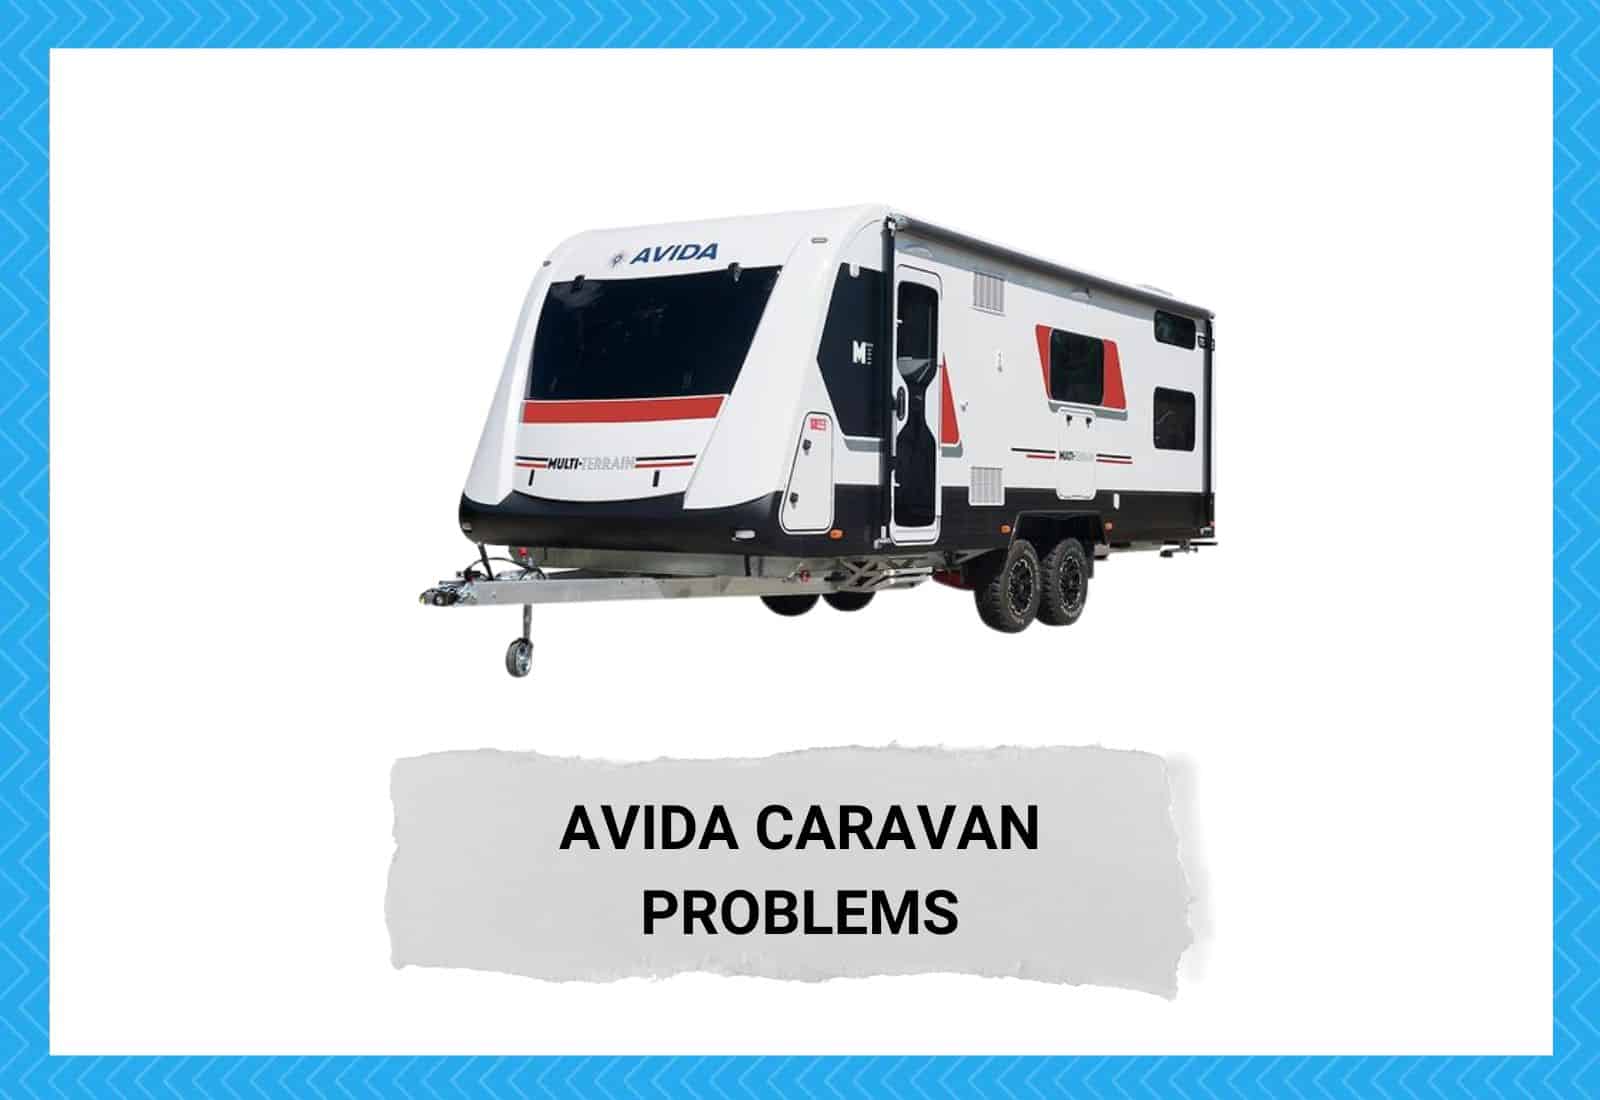 Avida Caravan Problems